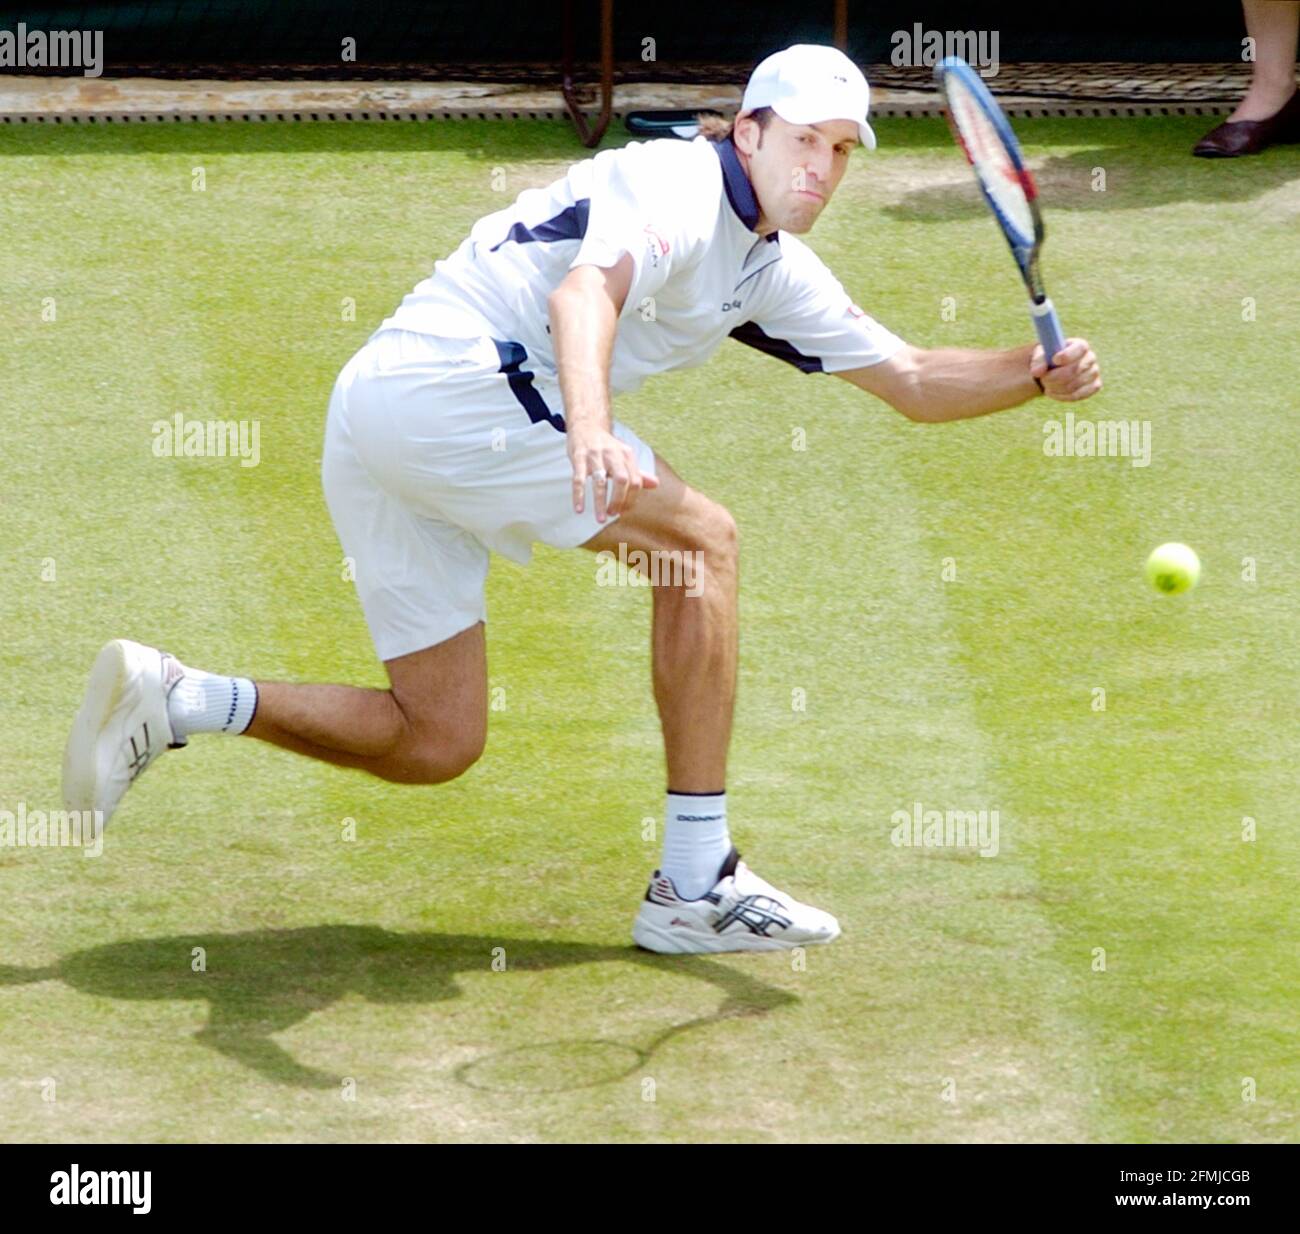 5th DAY WIMBLEDON TENNIS CHAMPIOSHIPS 2004.  25/6/2004 GREG RUSEDSKI DURING HIS MATCH WITH R.SCHUETTLER  Picture David Ashdown Wimbledon Tennis 2004 Stock Photo